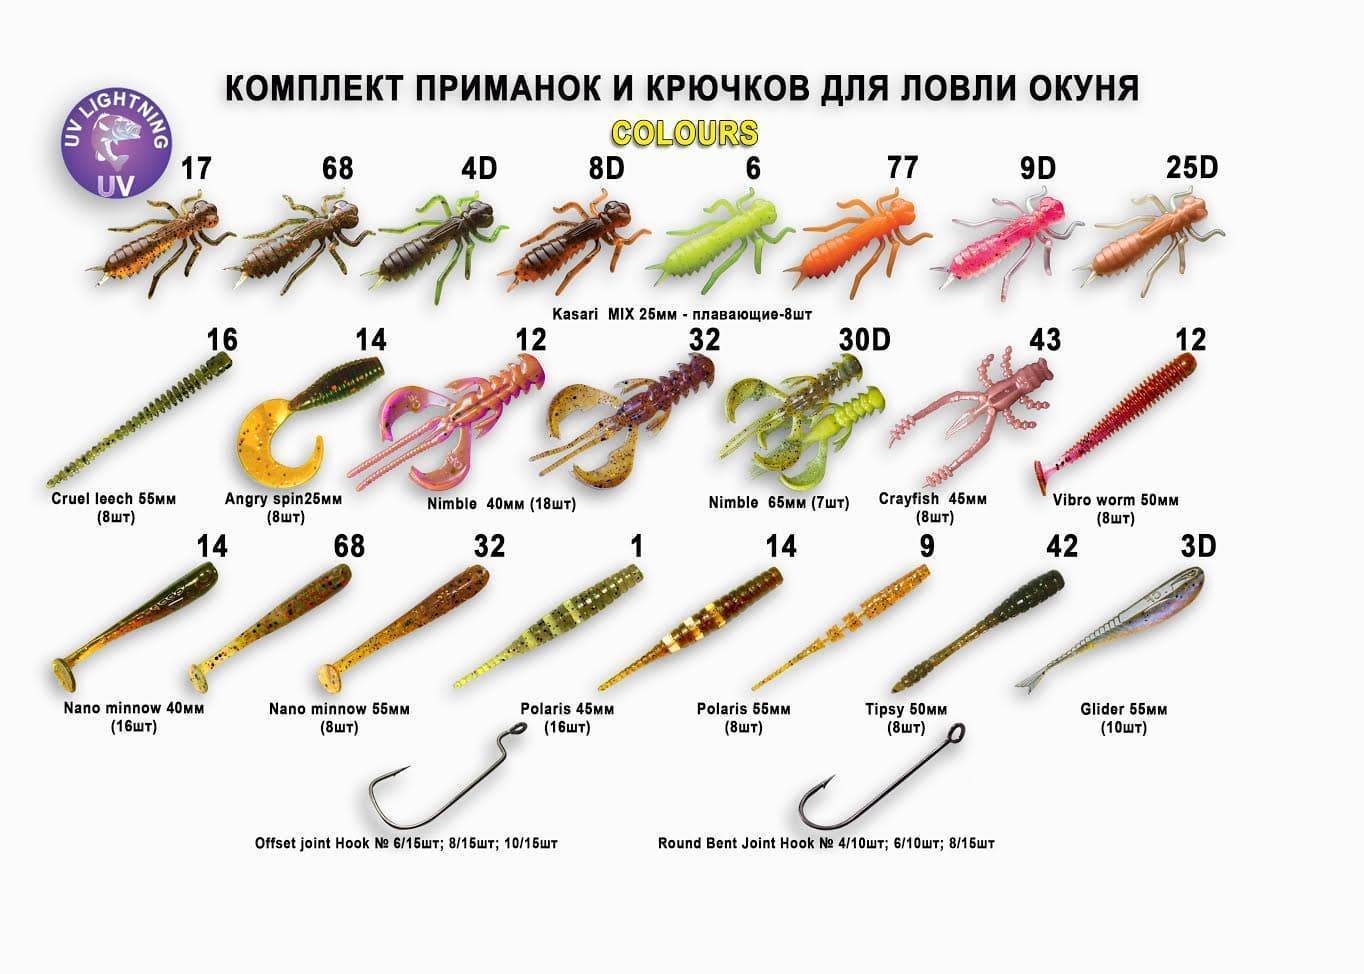 ᐉ лучшая съедобная резина на щуку: топ-10 - ✅ ribalka-snasti.ru